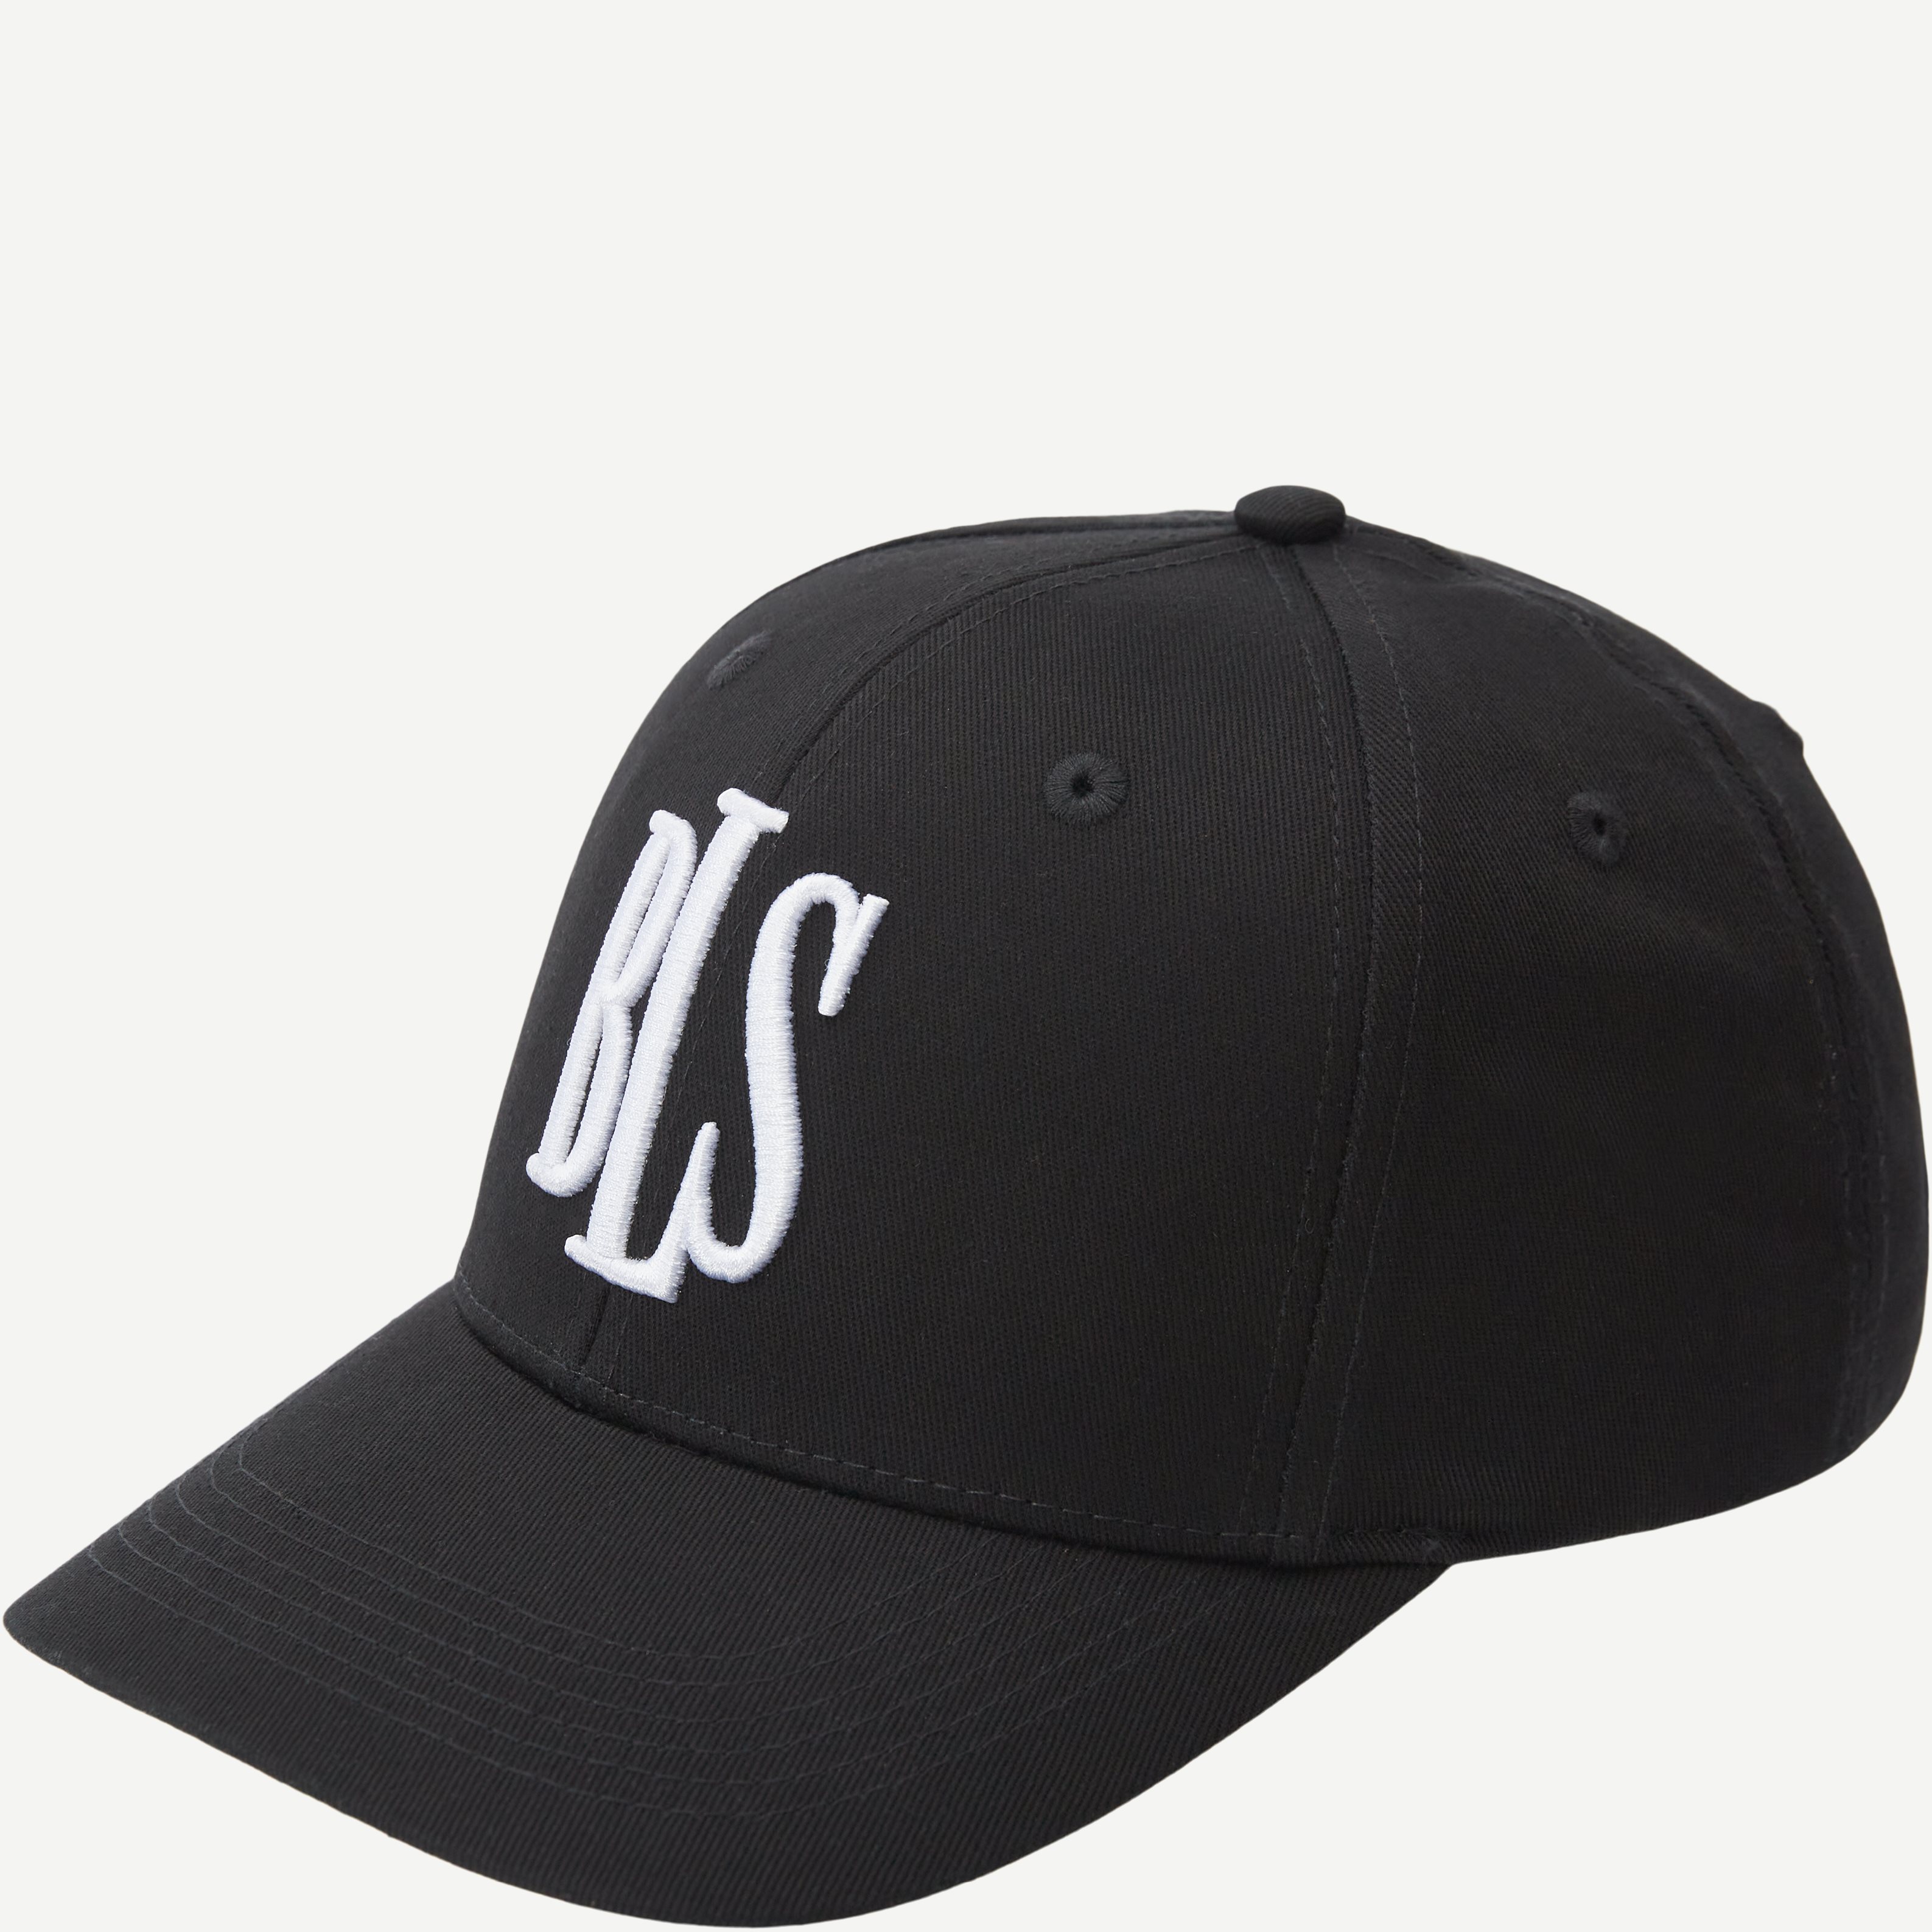 Classic baseball cap black - Caps - Regular fit - Sort